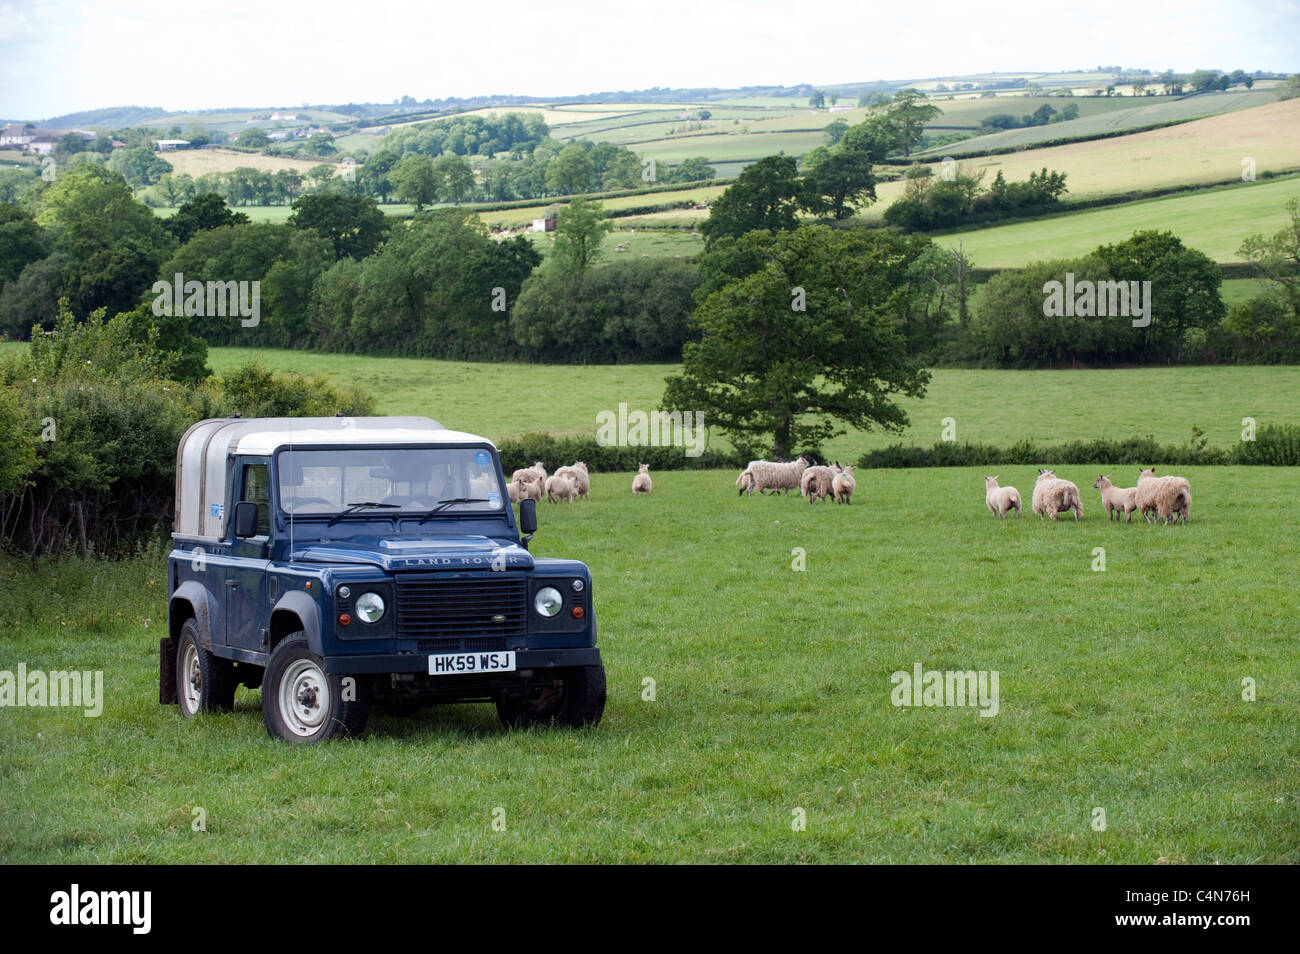 Autocollants 2 x One Life Farm il Drôle 4x4 off road agriculture Land Rover